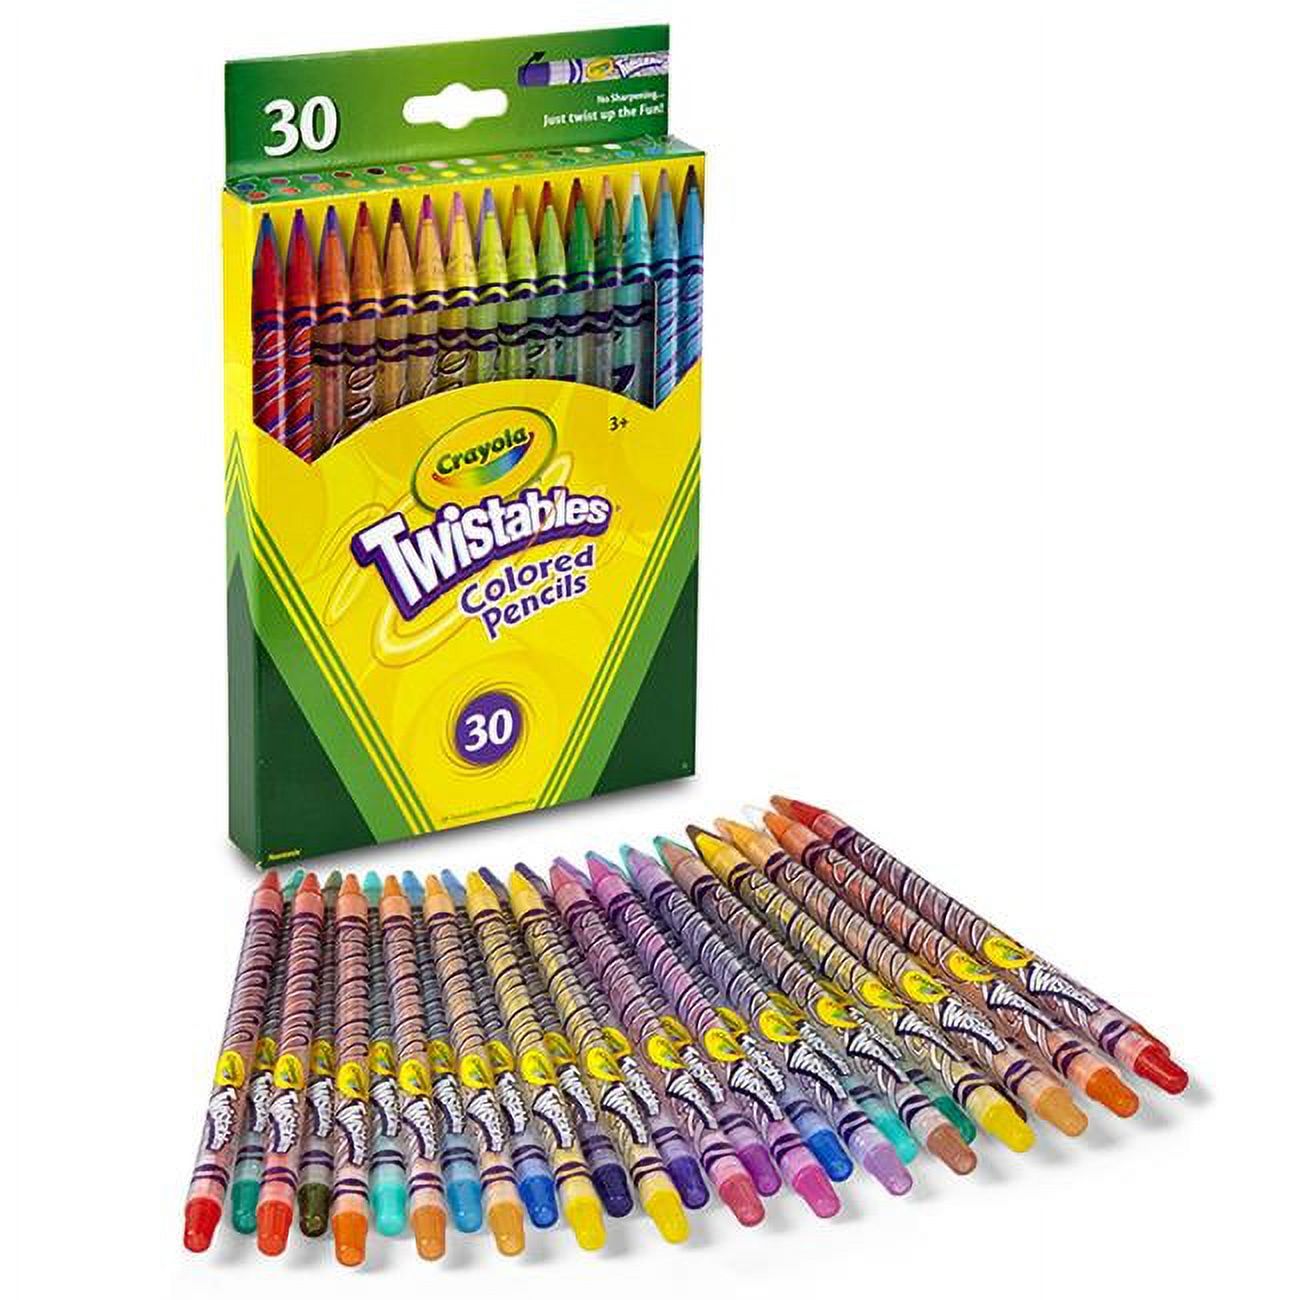 Crayola Twistables Colored Pencils 30 Ct. per Box (Set of 2 Boxes)